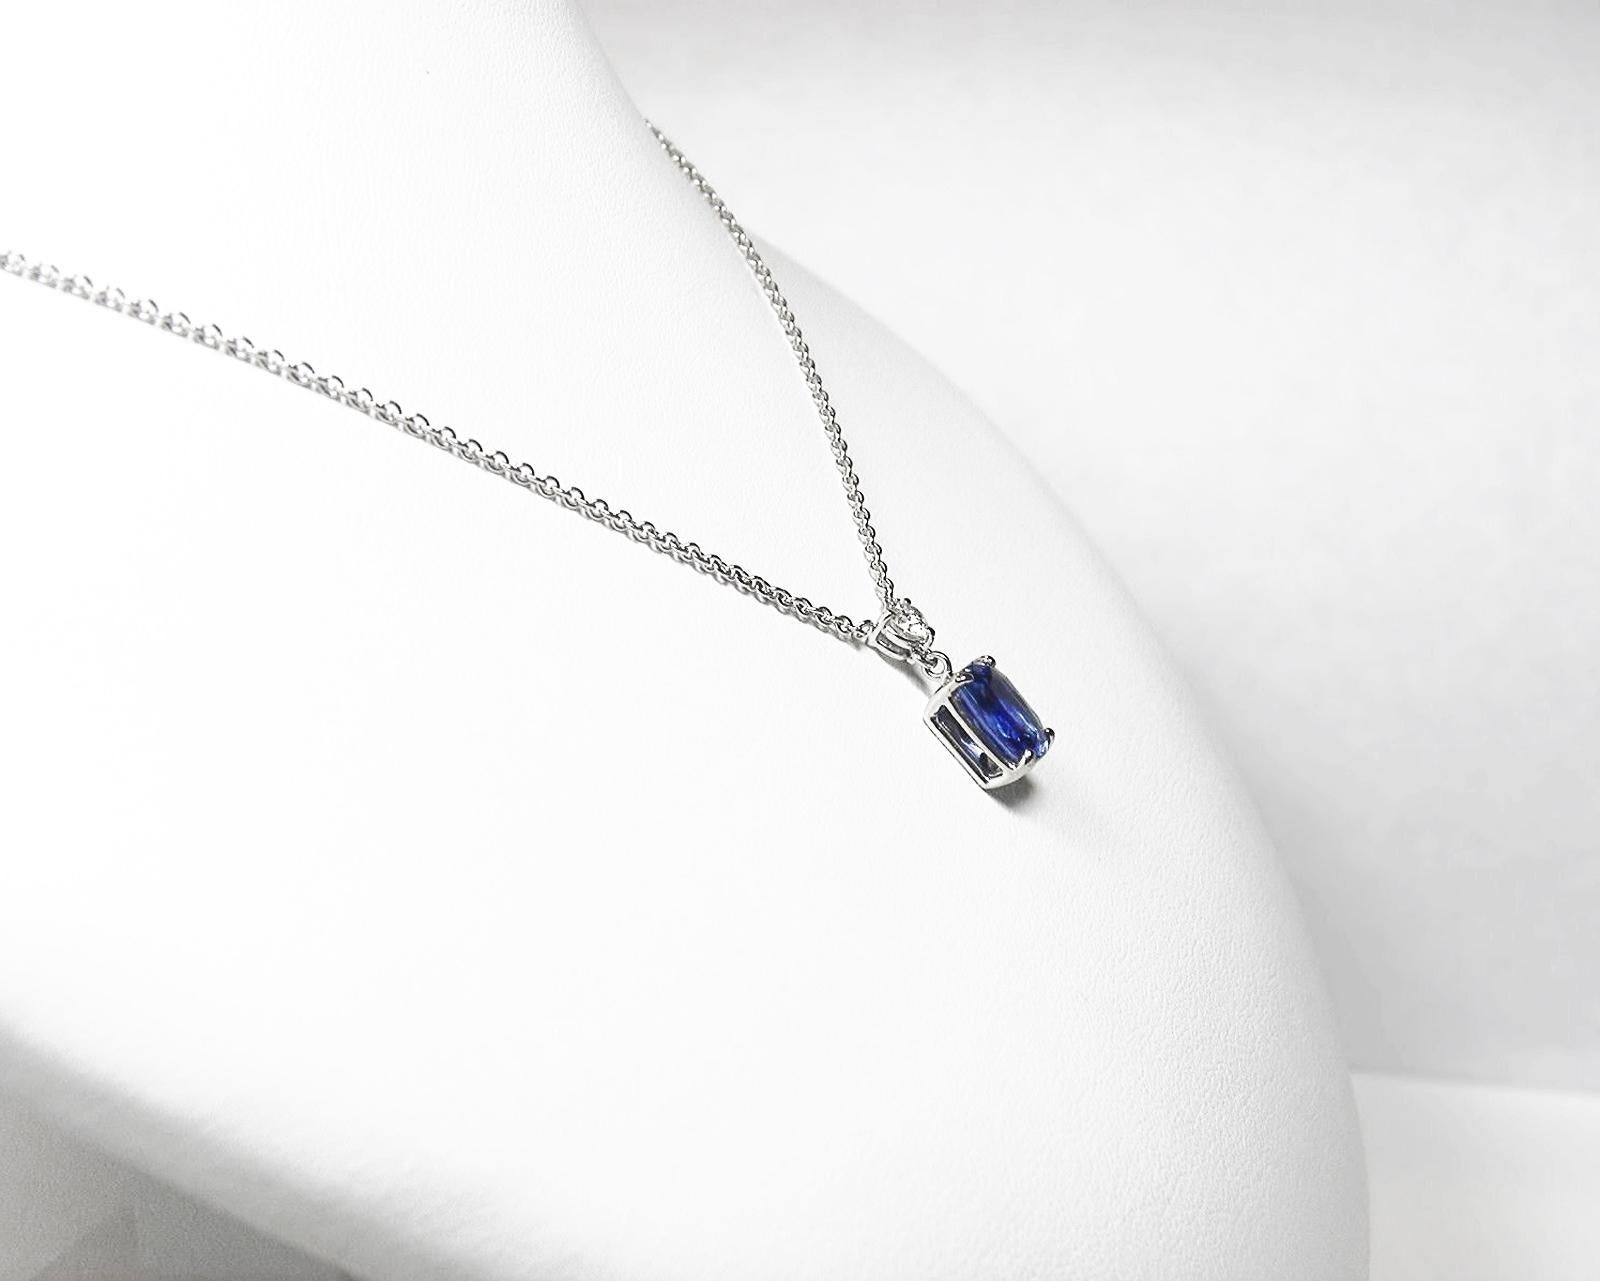 4.15 Carat Natural Blue Sapphire and Diamond Pendant Necklace Platinum 950 1